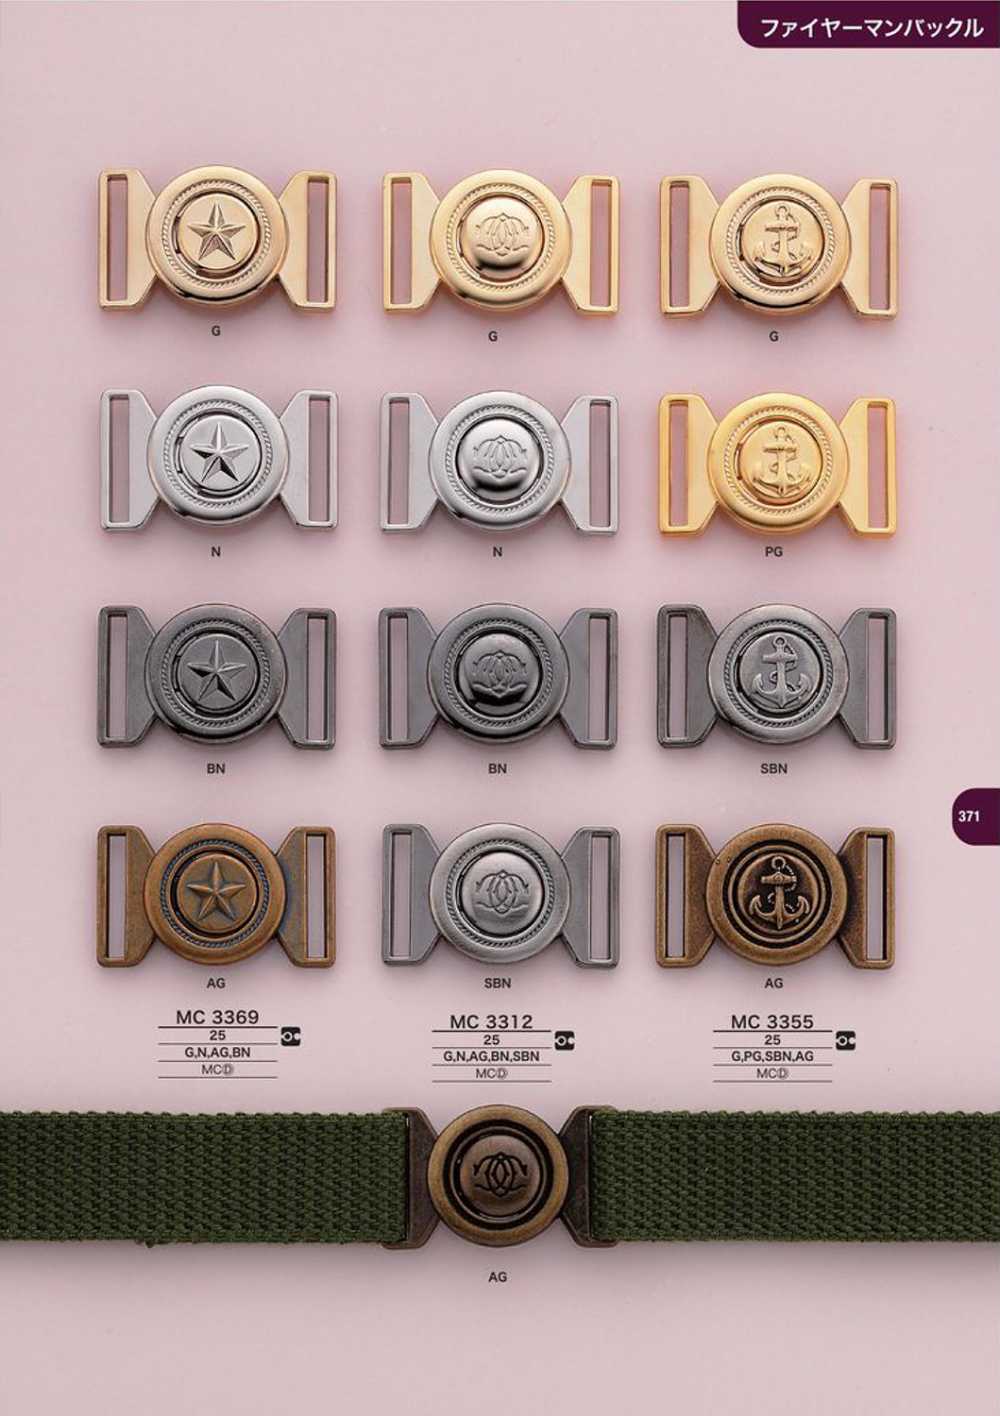 MC3312 皮带扣[扣和环] 爱丽丝纽扣